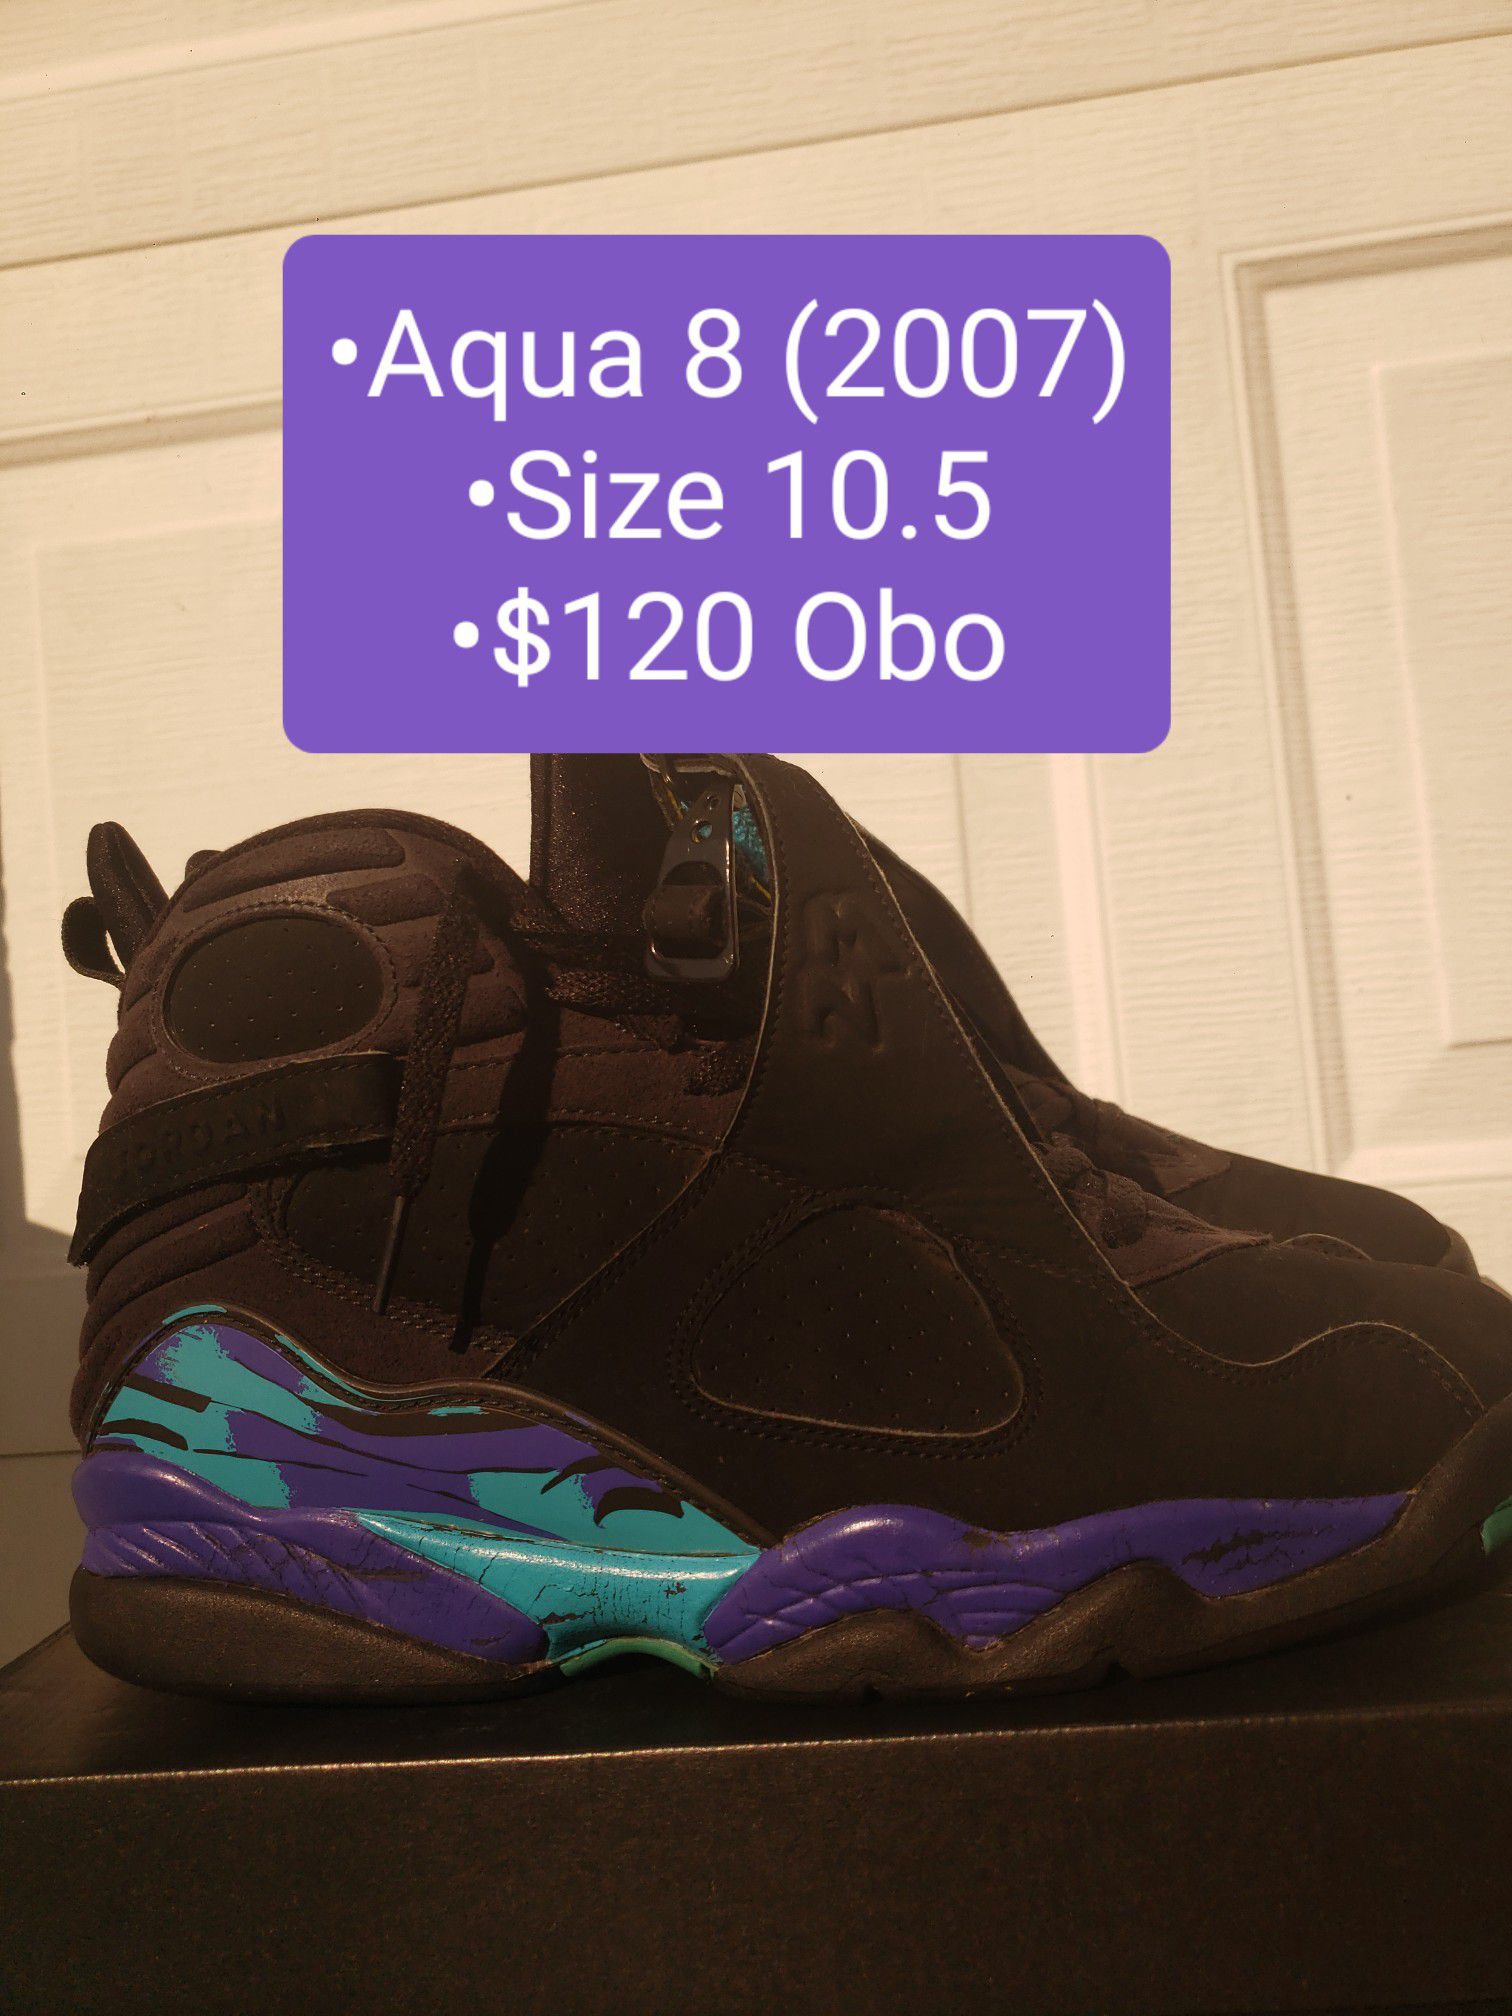 Mens Nike Air Jordan Retro 8 "Aqua" (2007) Size 10.5 $120 Obo